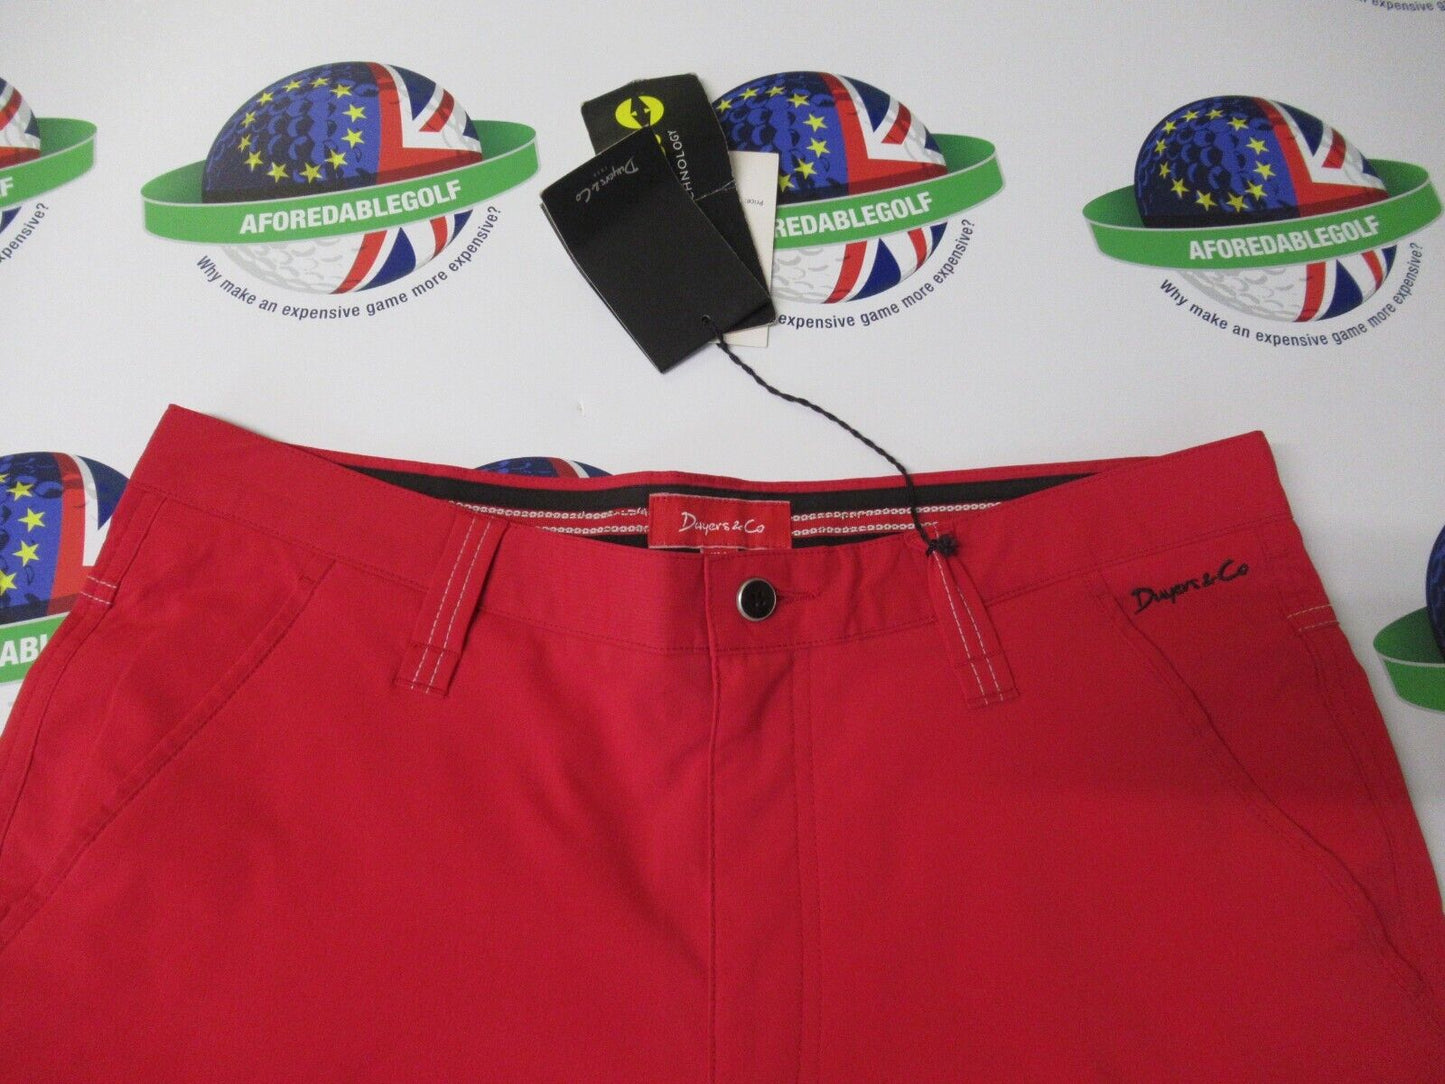 dwyers & co micro tech 2.0 golf trousers red waist 34" leg 31"